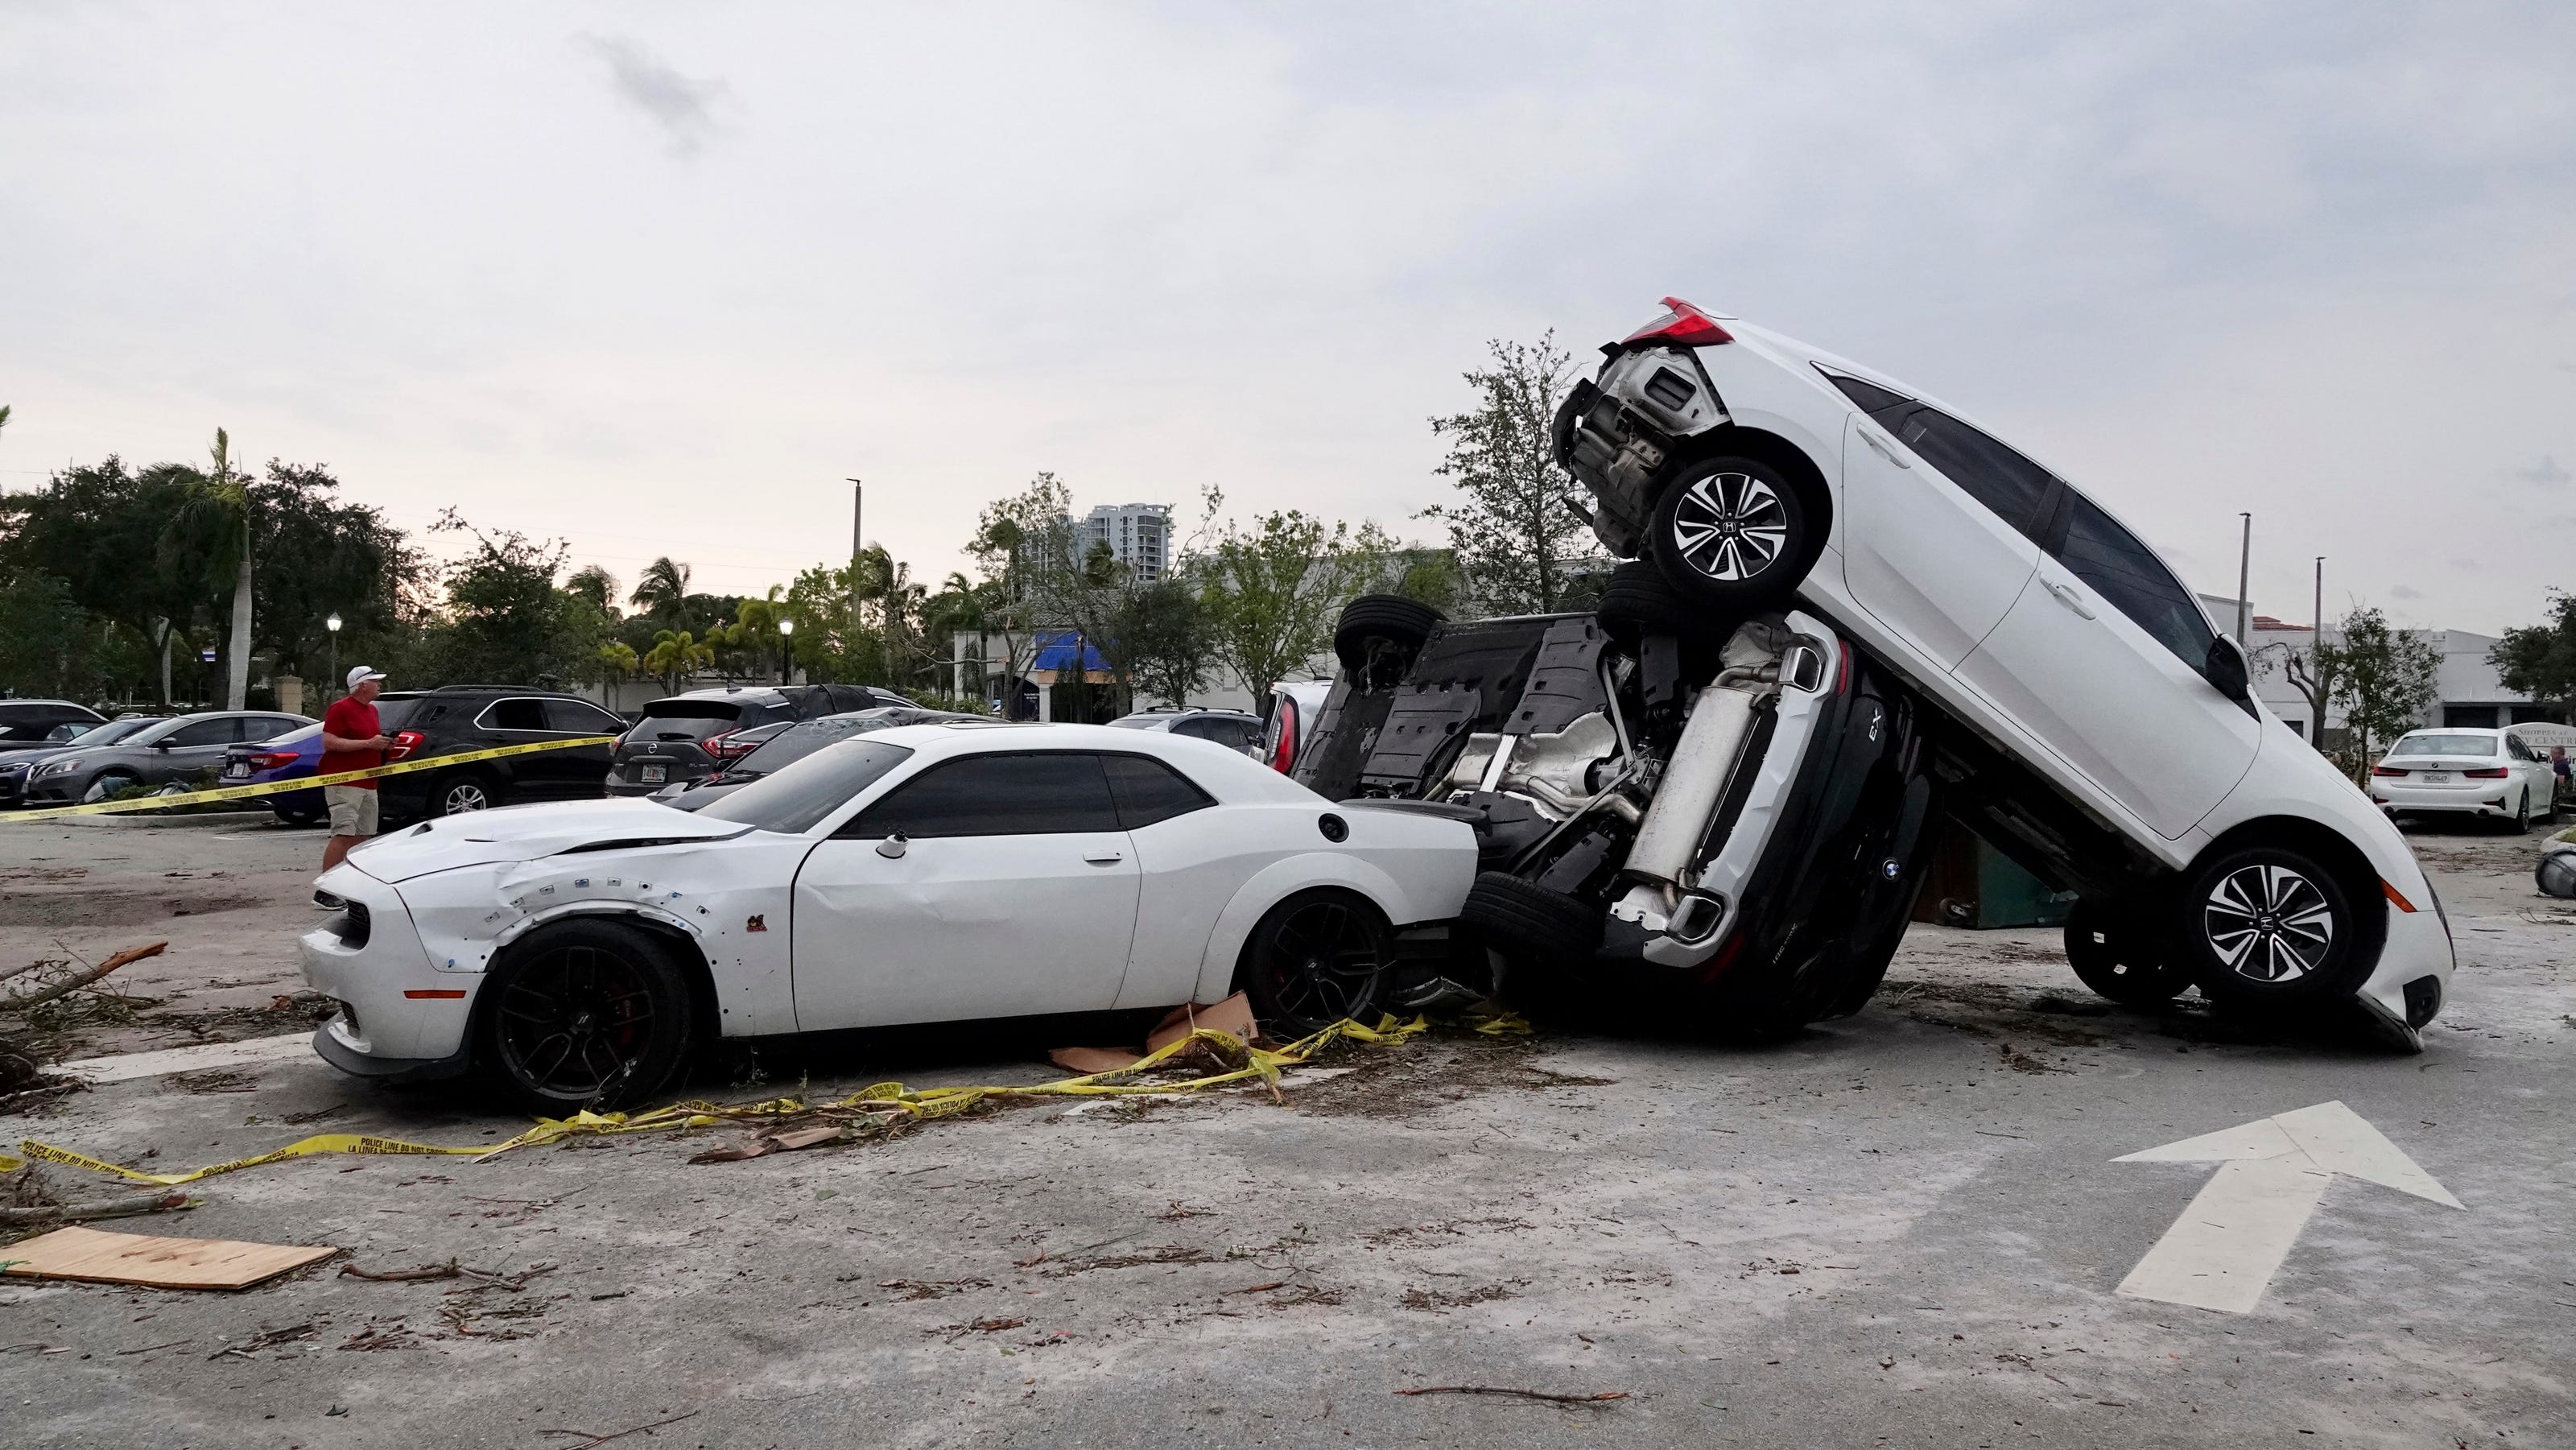 Tornadoes slam Florida and Virginia, creating major damage – USA TODAY